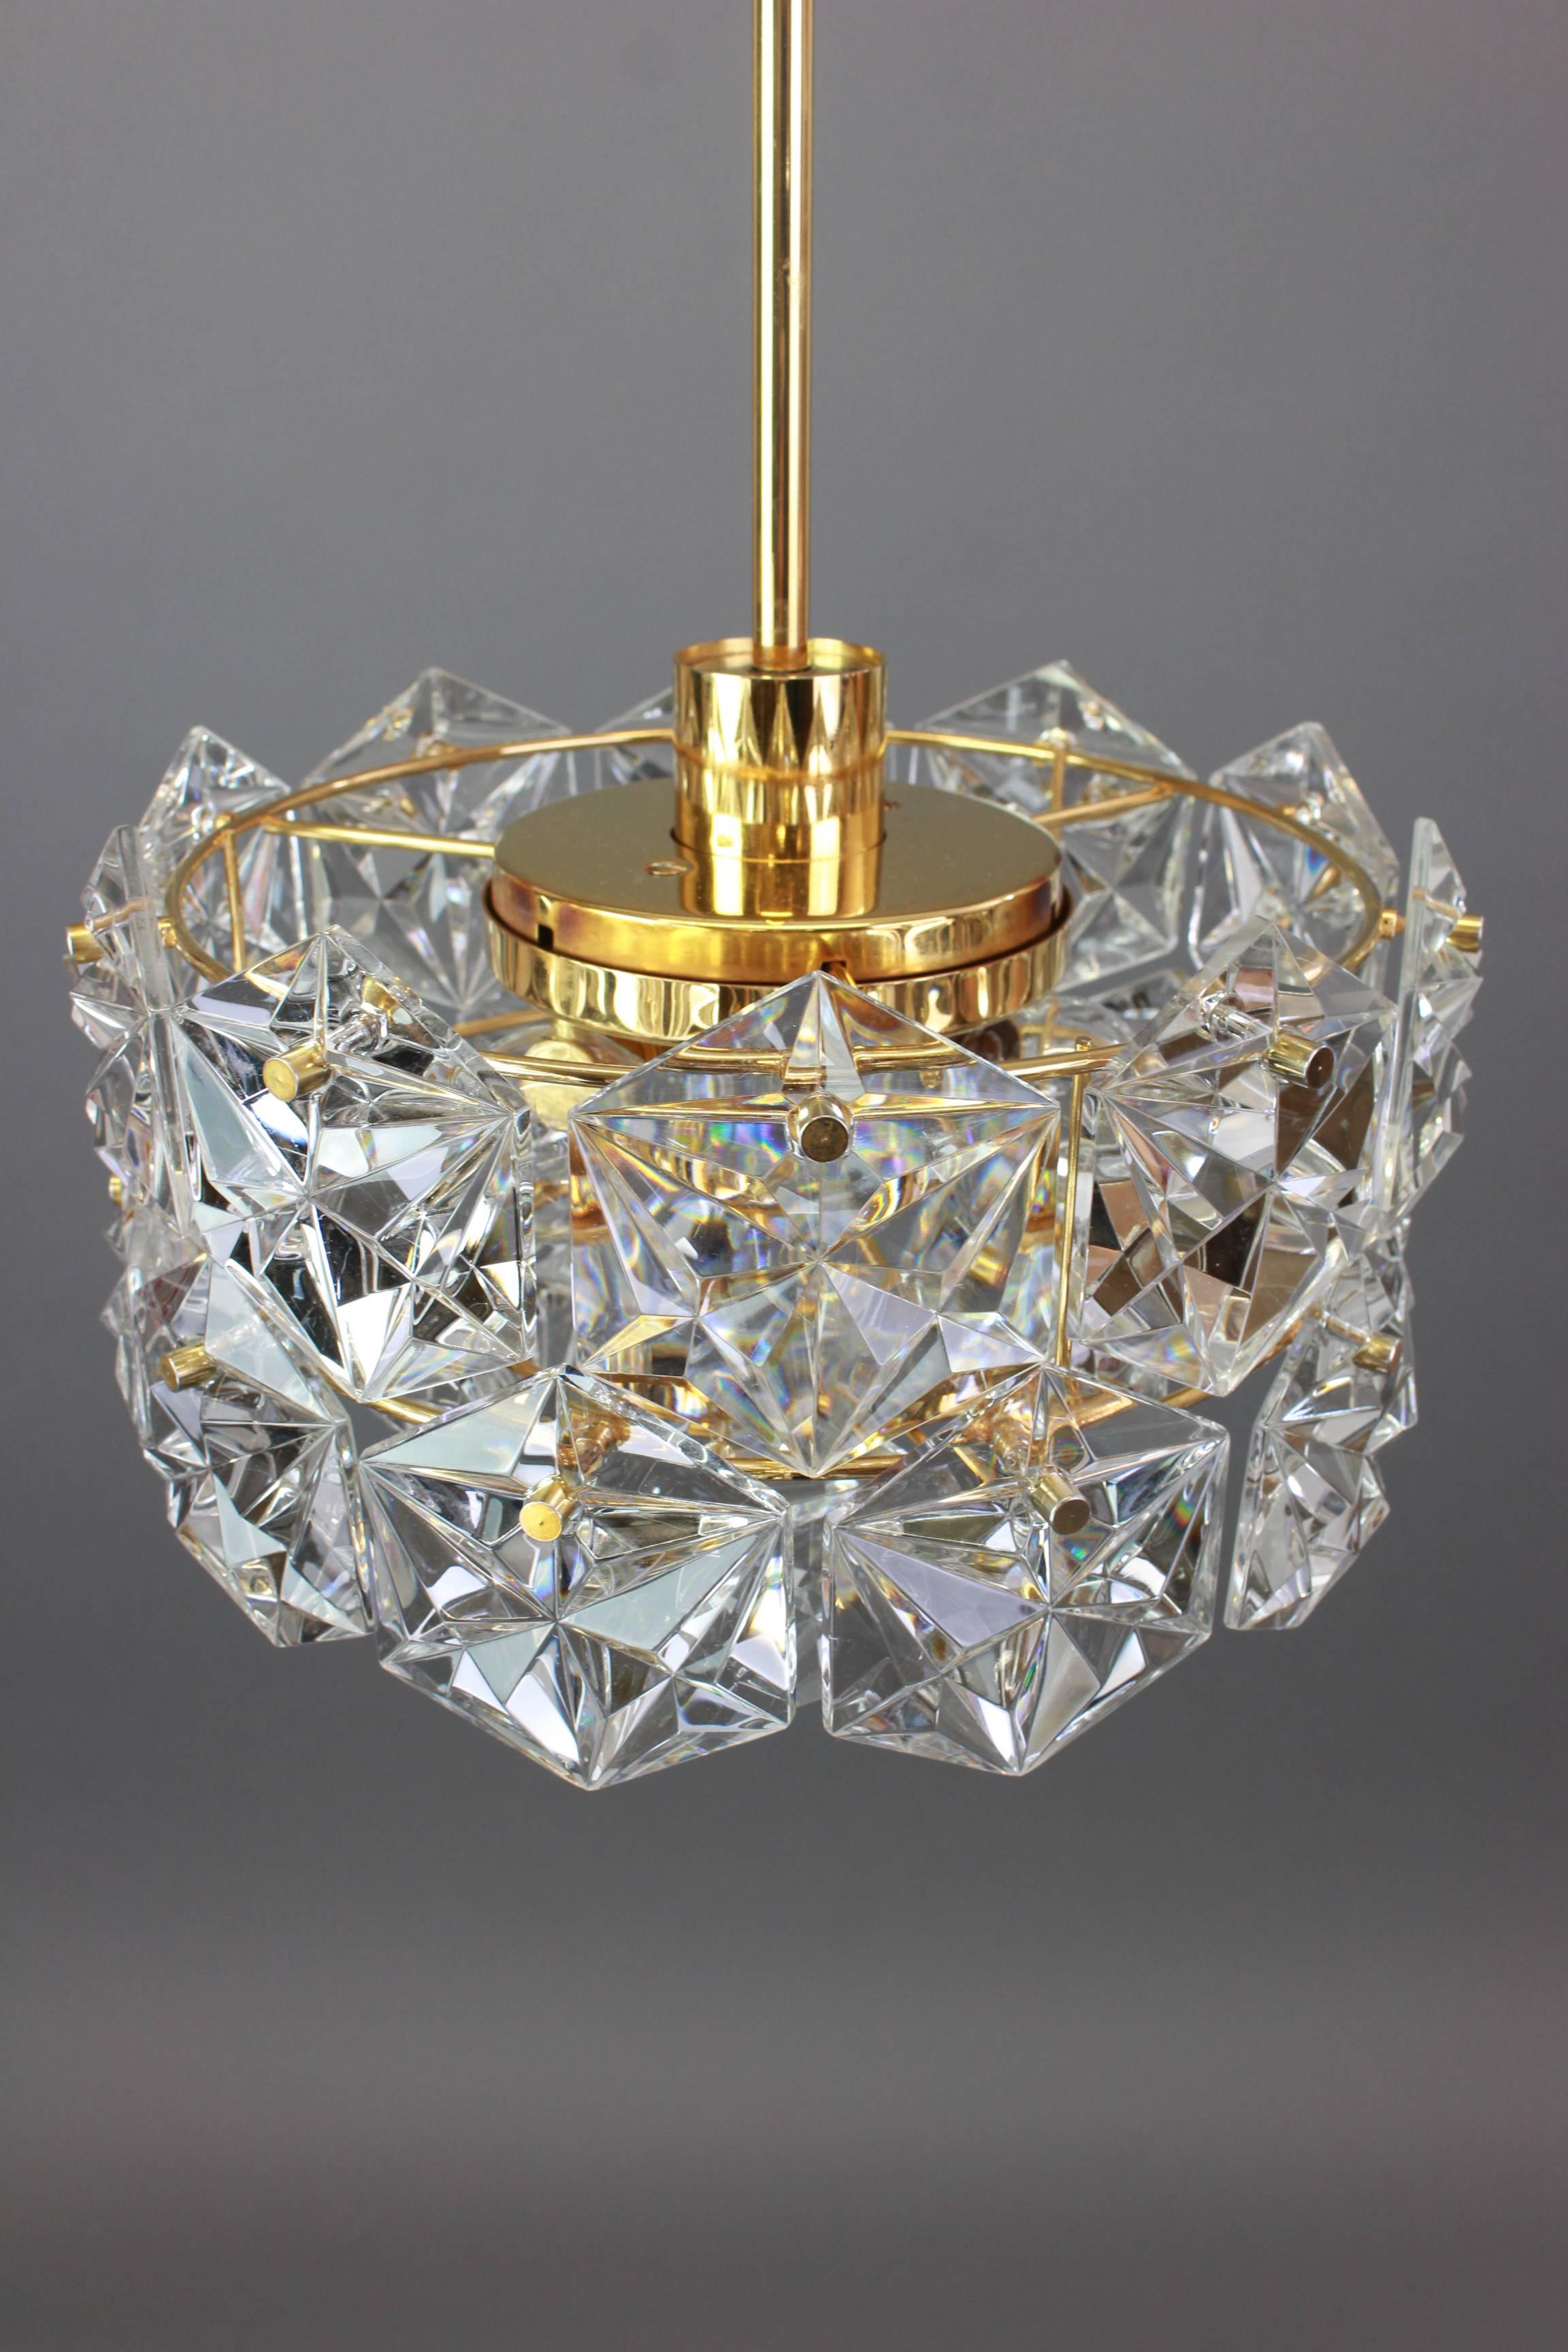 1 of 2 Stunning Chandelier, Brass and Crystal Glass by Kinkeldey, Germany, 1970 1